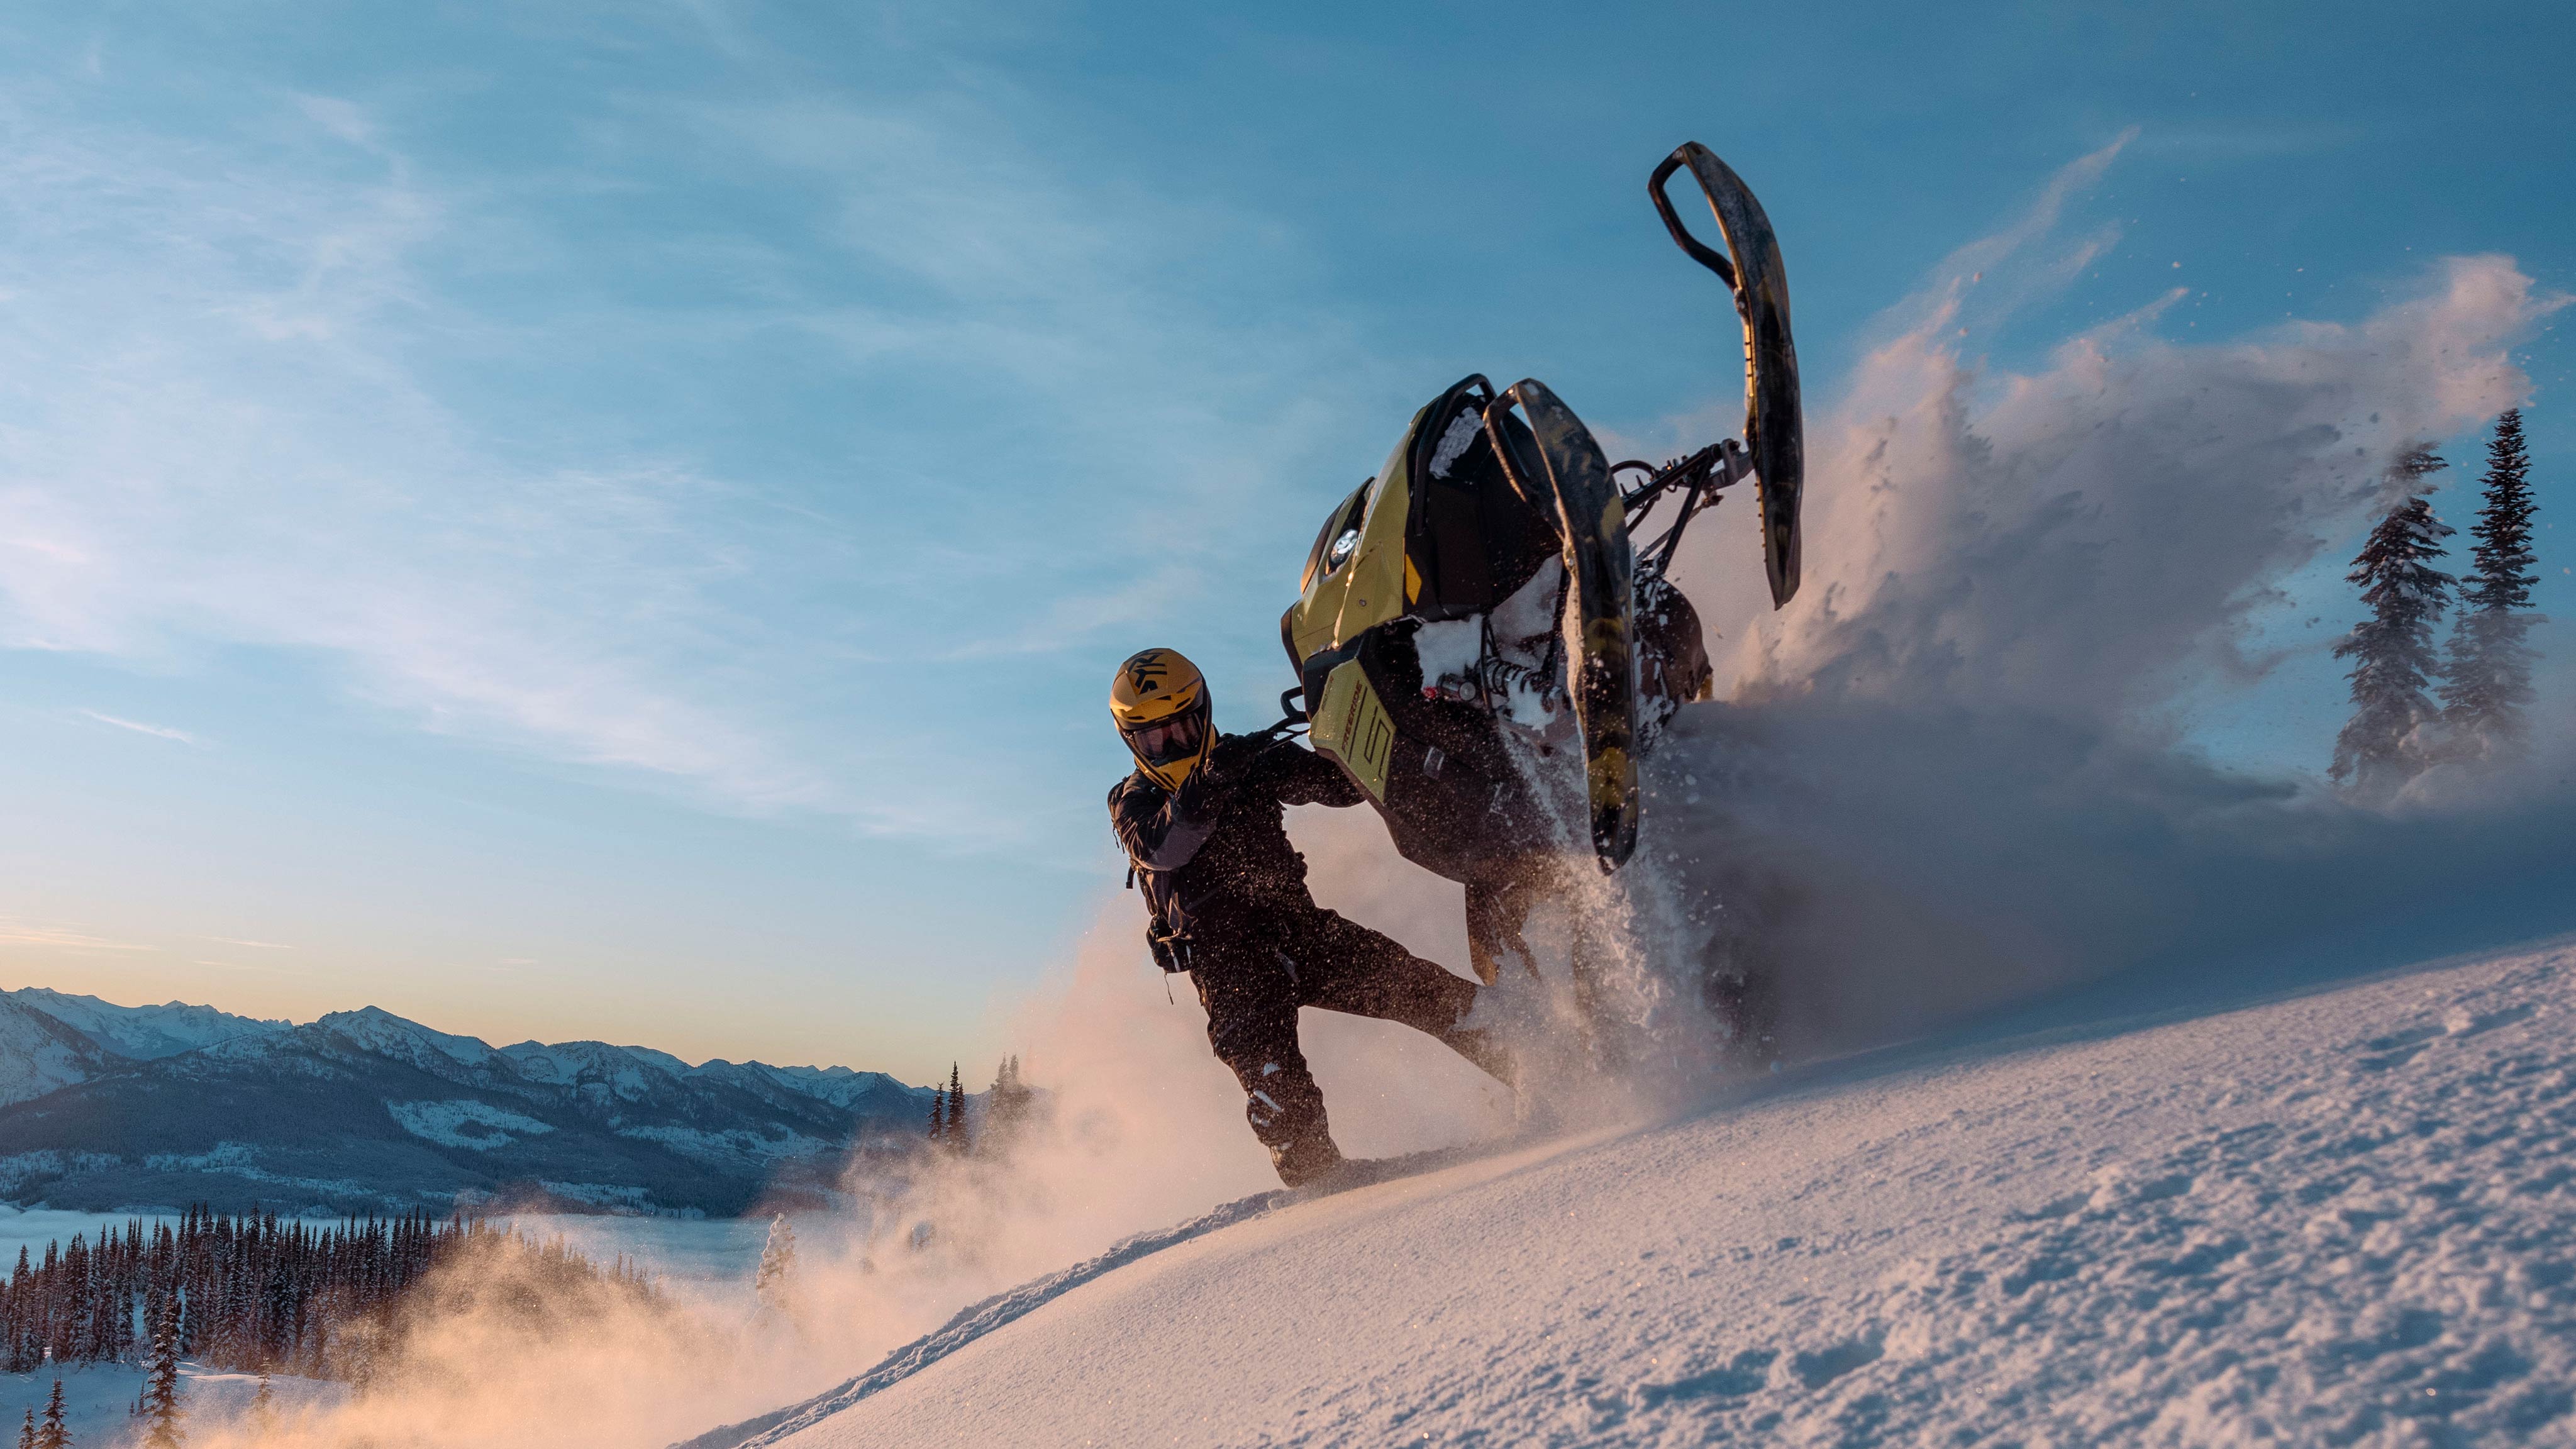 2025 SkiDoo DeepSnow Snowmobile Lineup